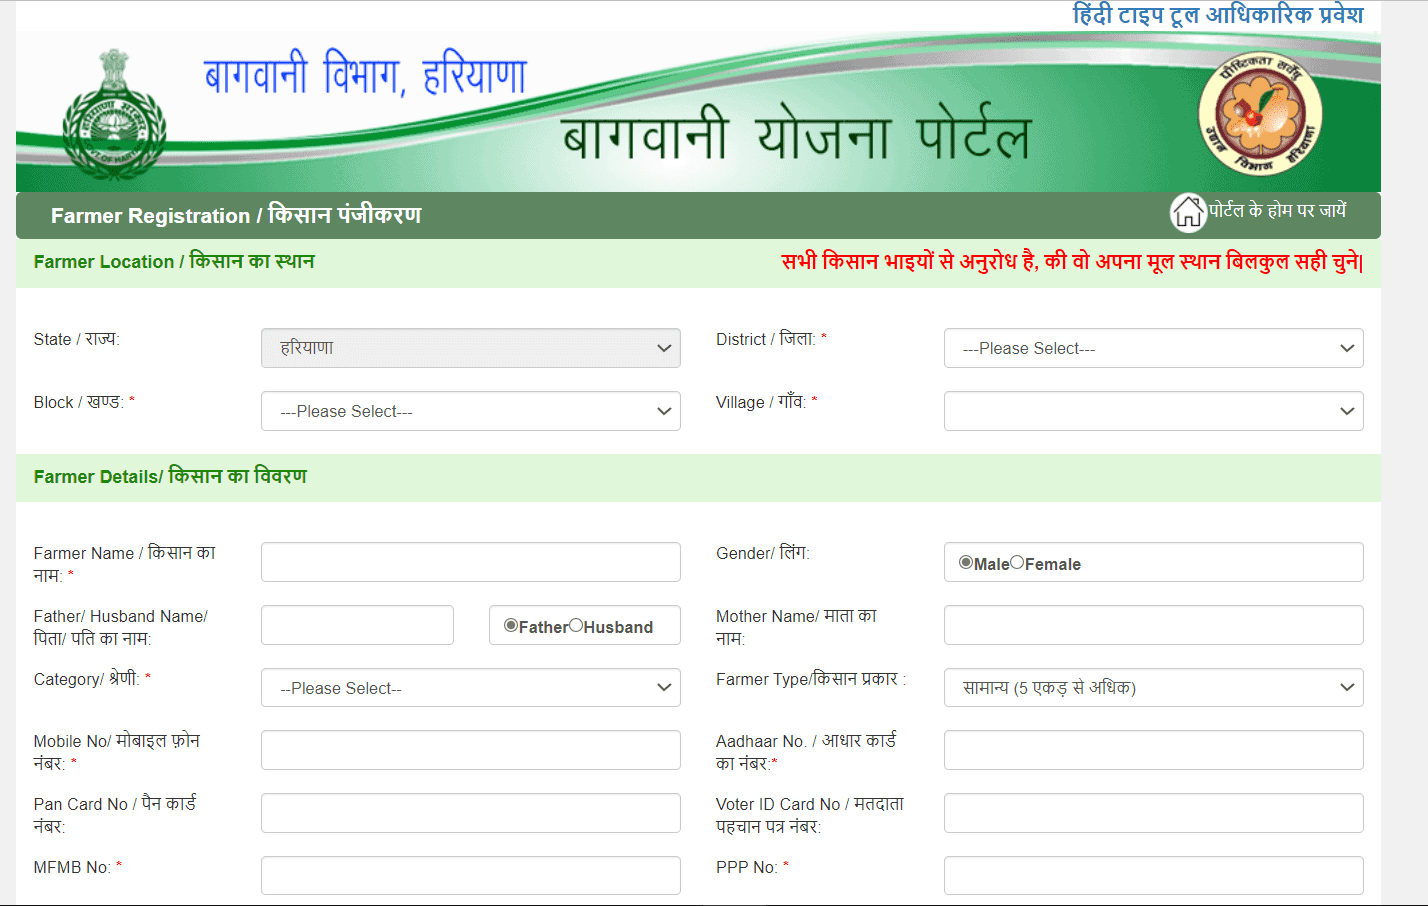 Haryana Chief Minister Horticulture Insurance Scheme Online Registration